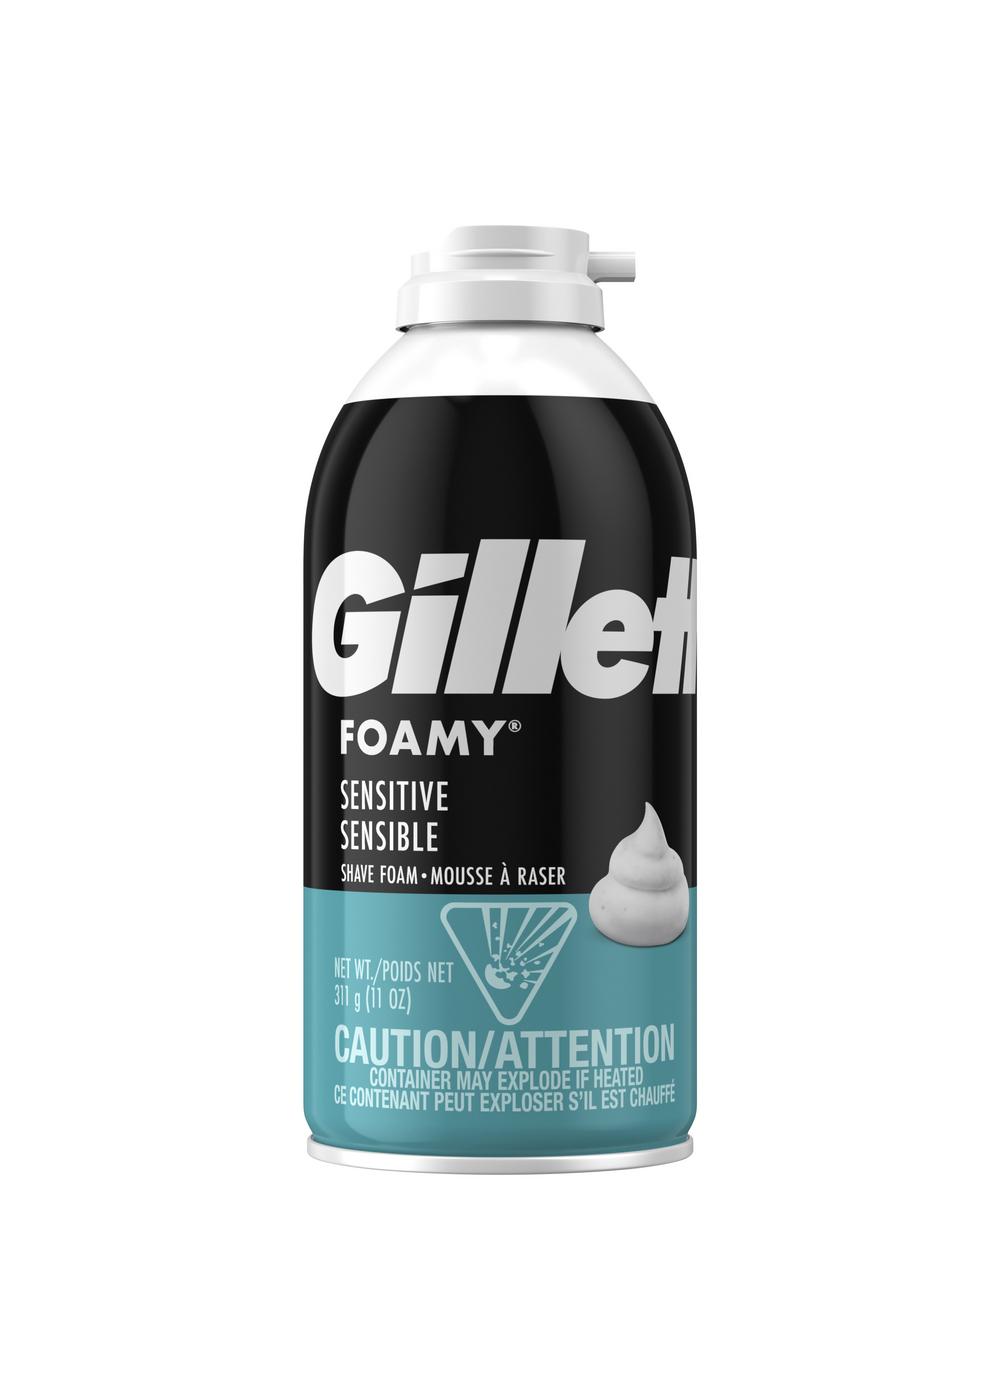 Gillette Foamy Shave Foam -  Sensitive; image 1 of 10